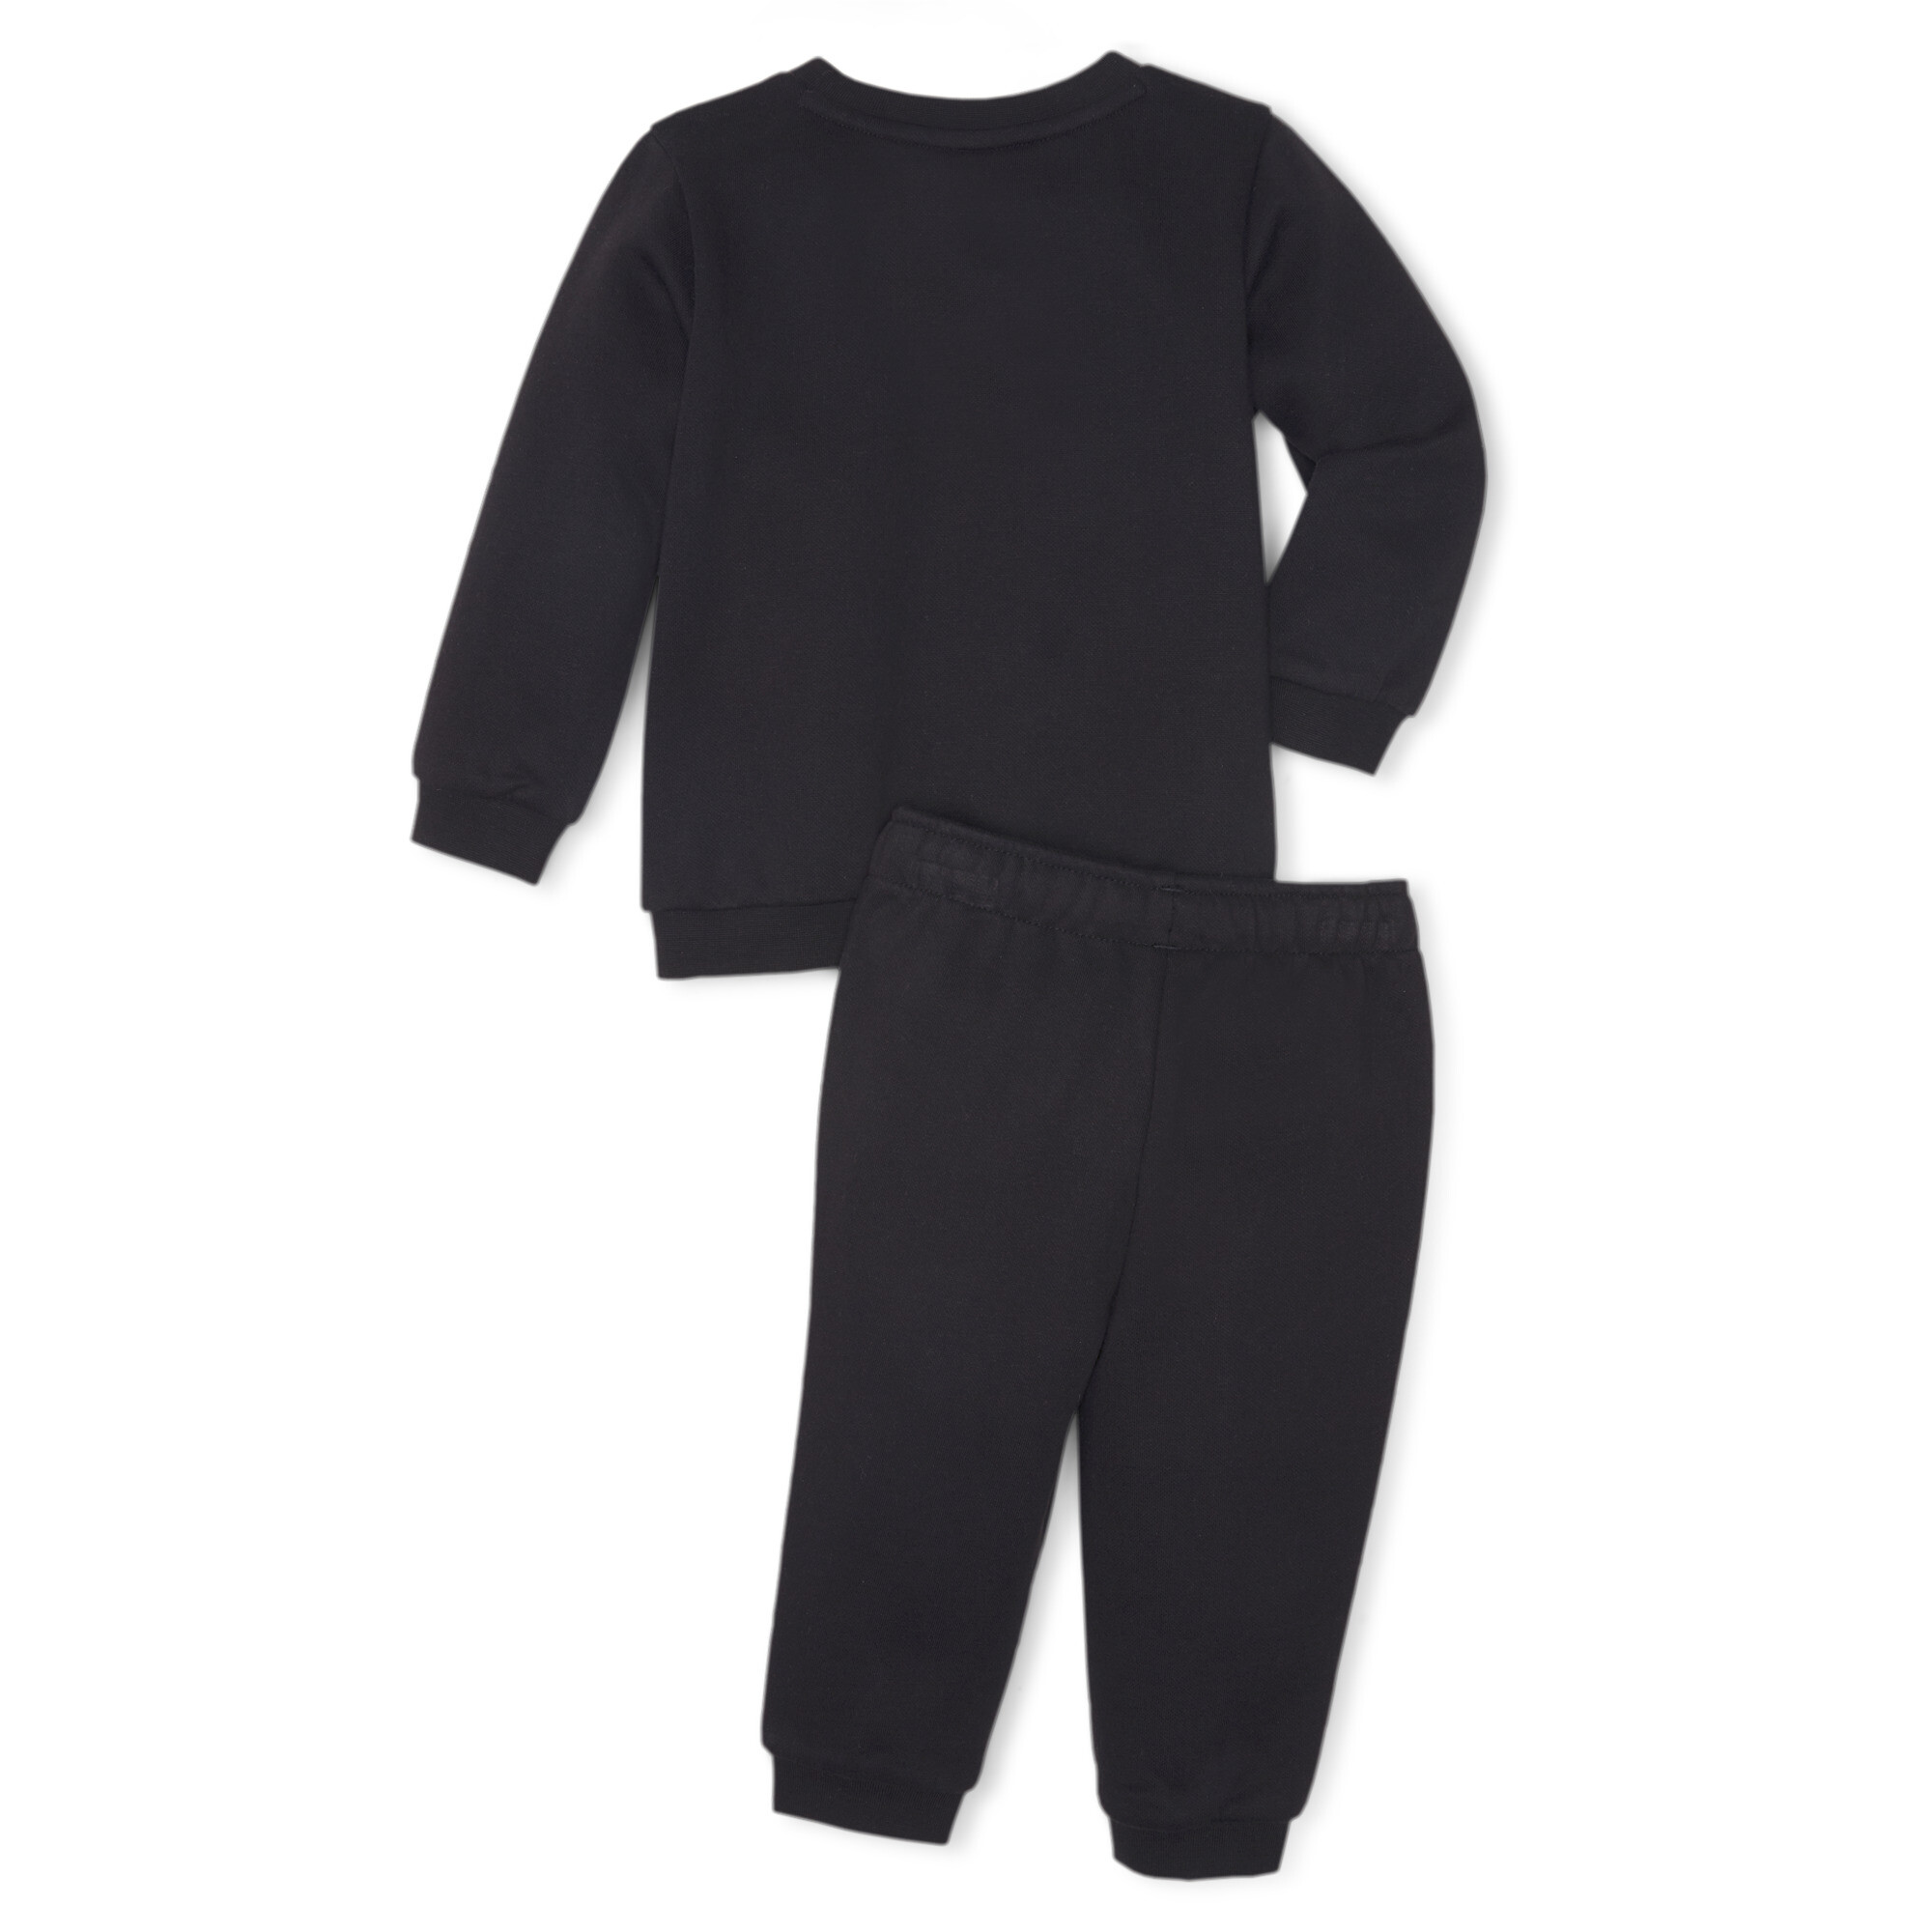 PUMA Essentials Minicats Crew Neck Babies' Jogger Suit In Black, Size 2-4 Months